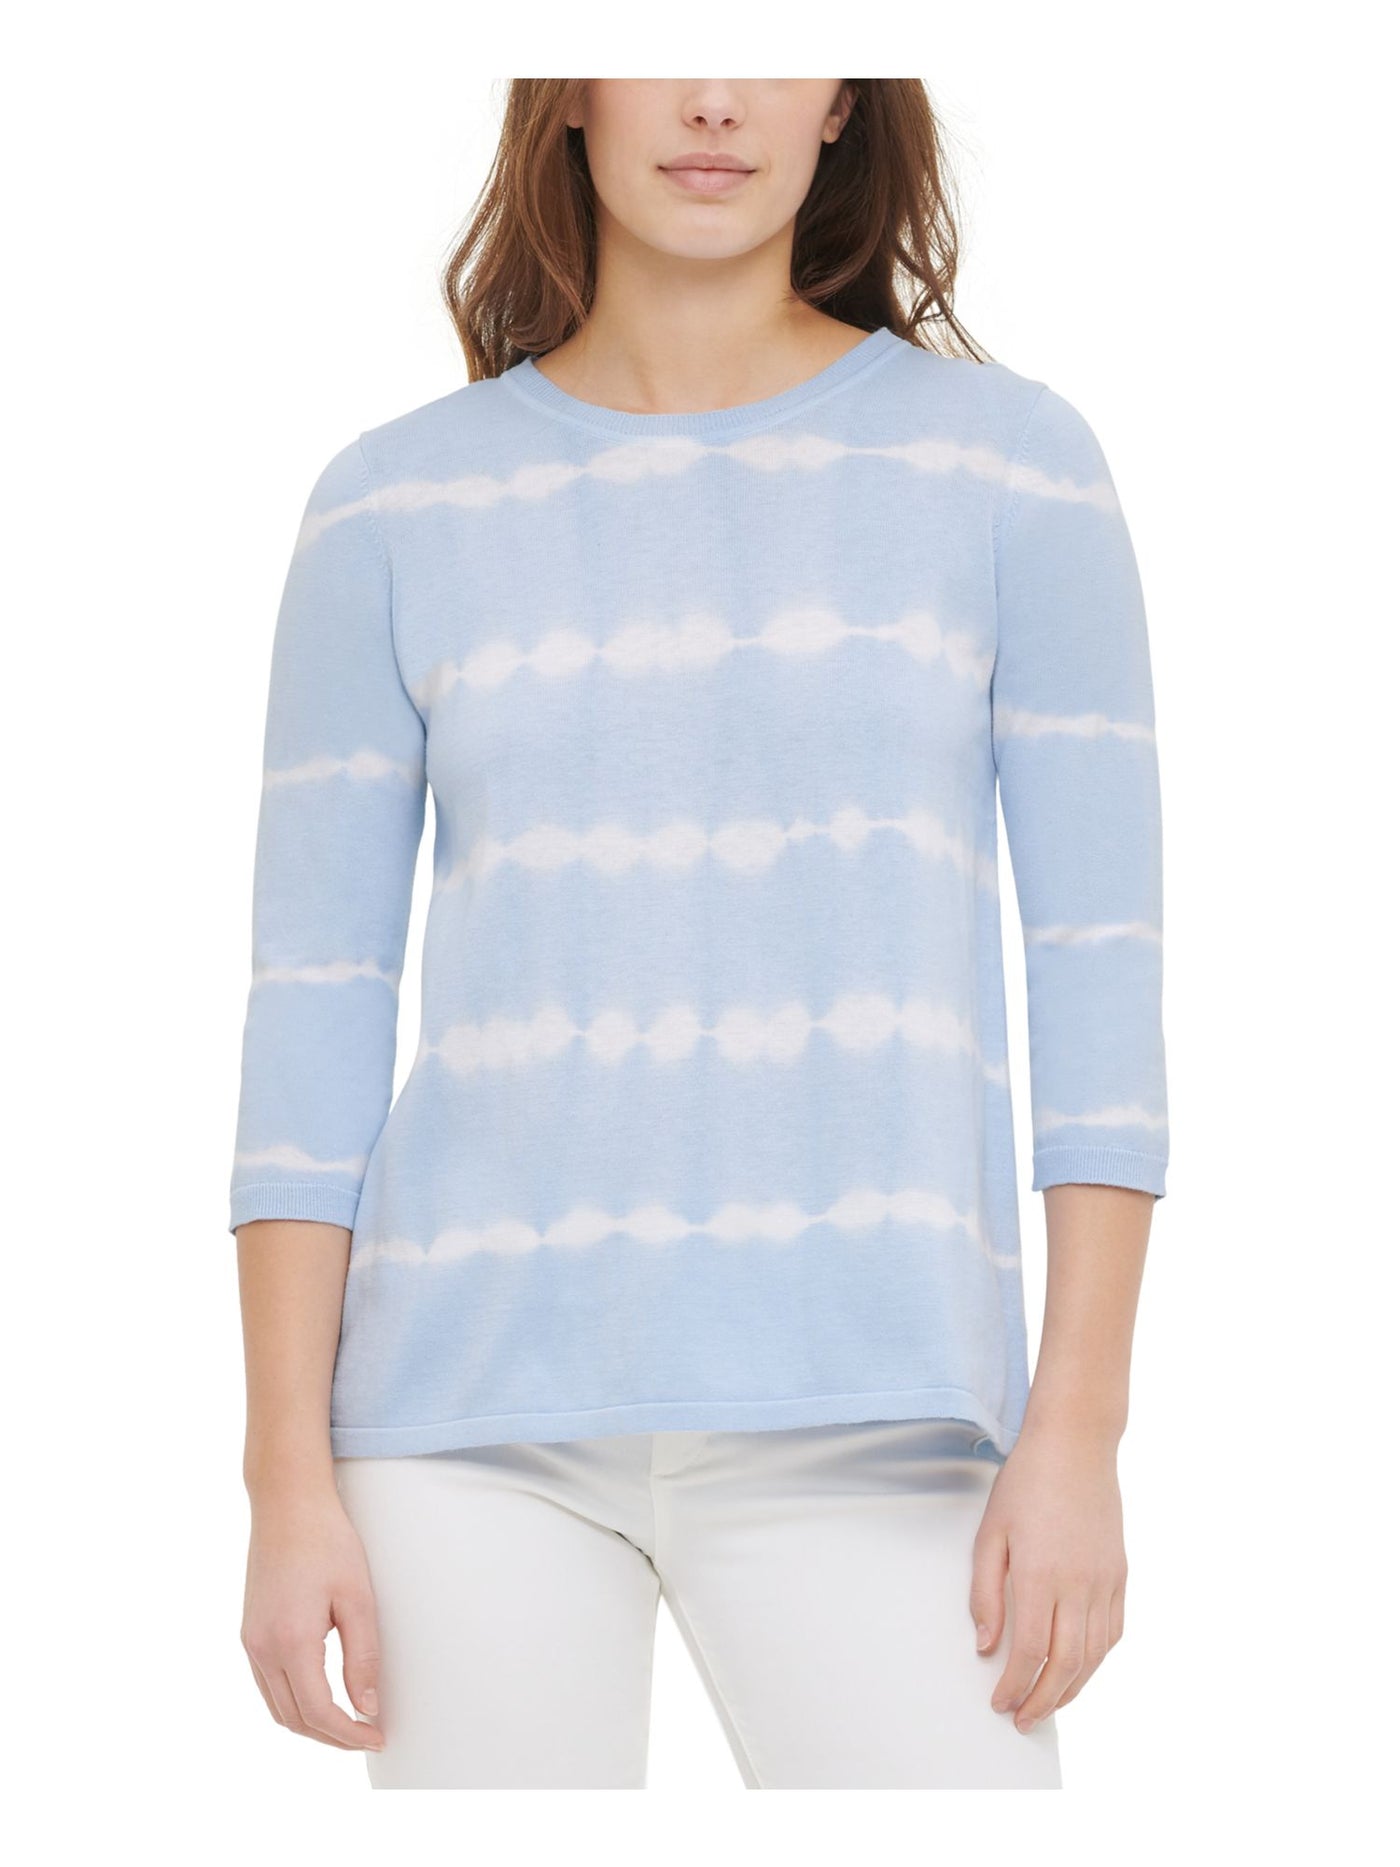 CALVIN KLEIN Womens Light Blue Acid Wash 3/4 Sleeve Jewel Neck Sweater XL